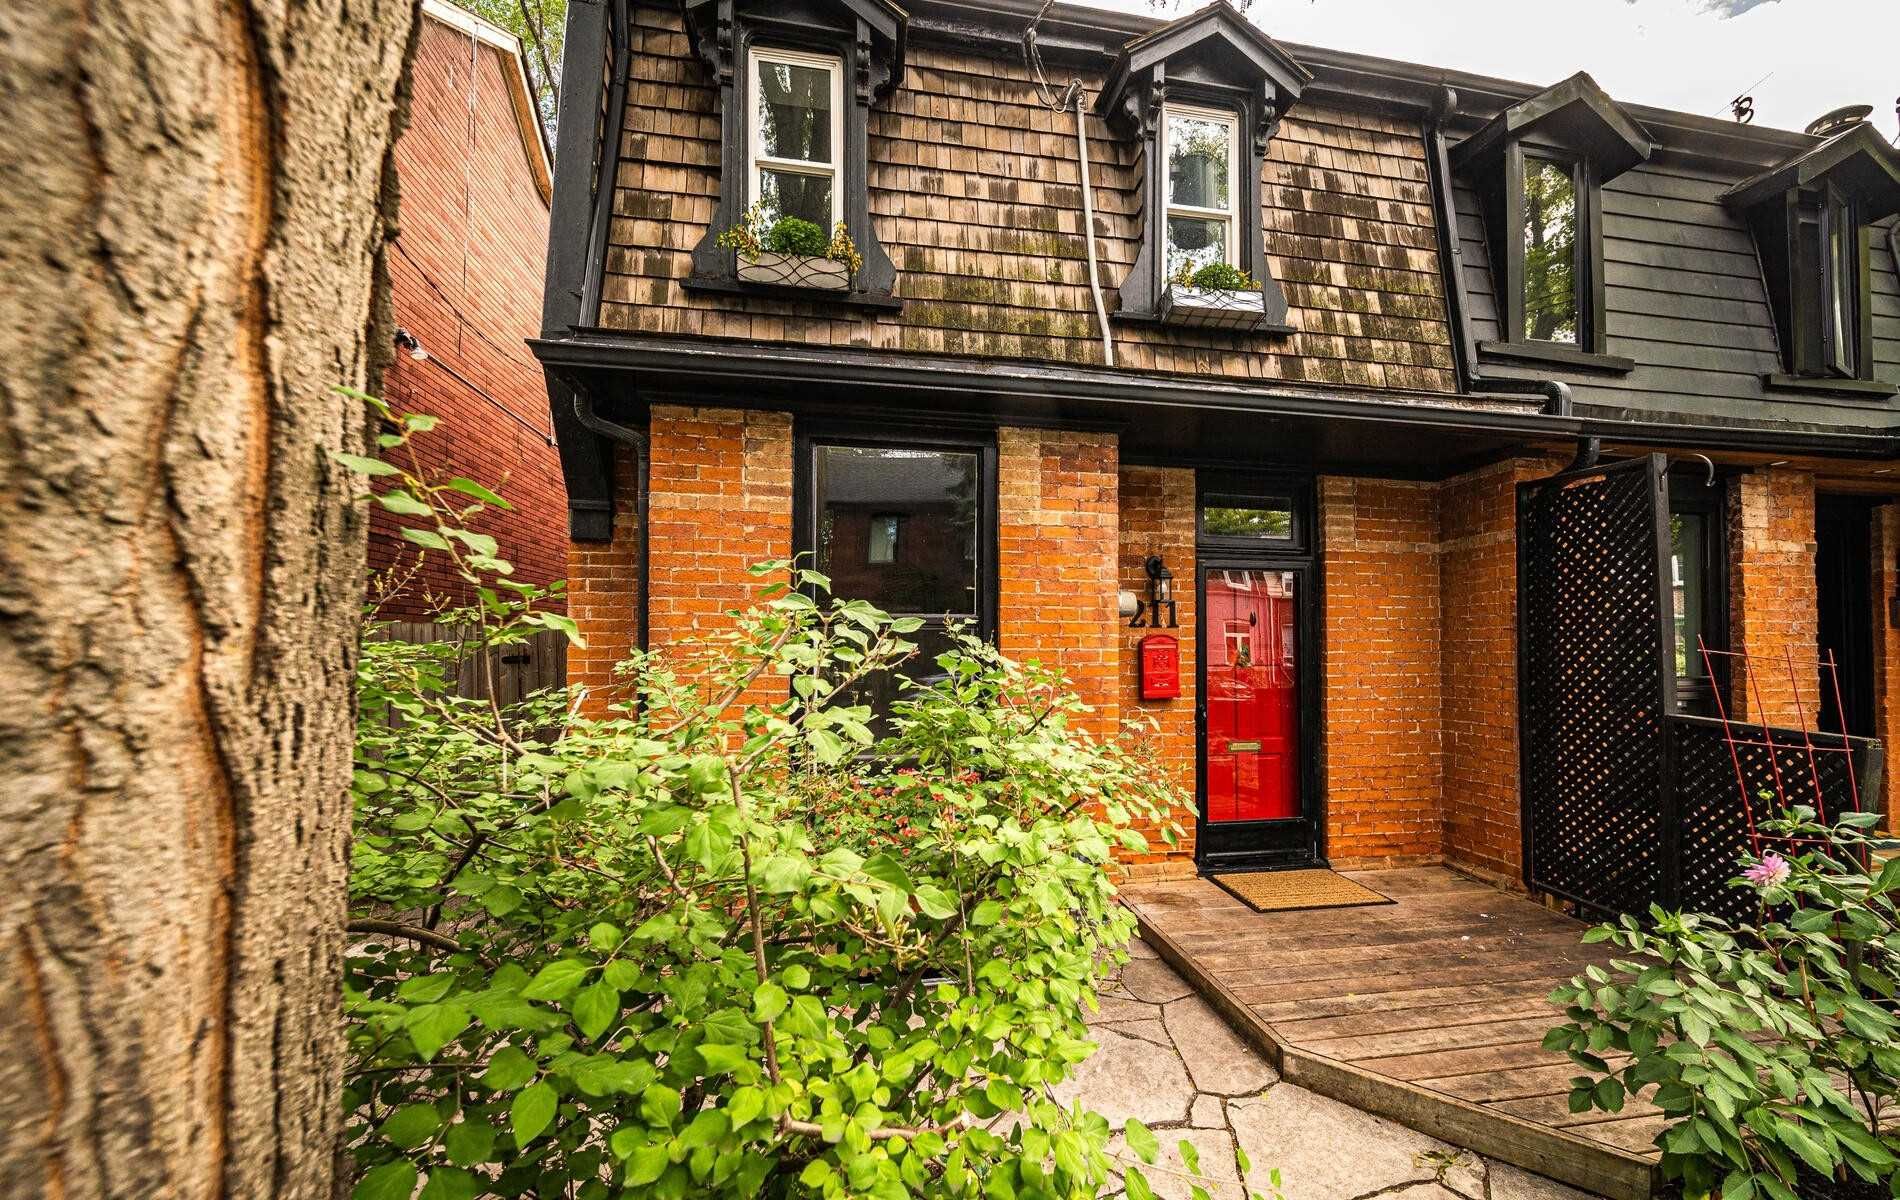 Main Photo: 211 Hamilton Street in Toronto: South Riverdale House (2-Storey) for sale (Toronto E01)  : MLS®# E5369251